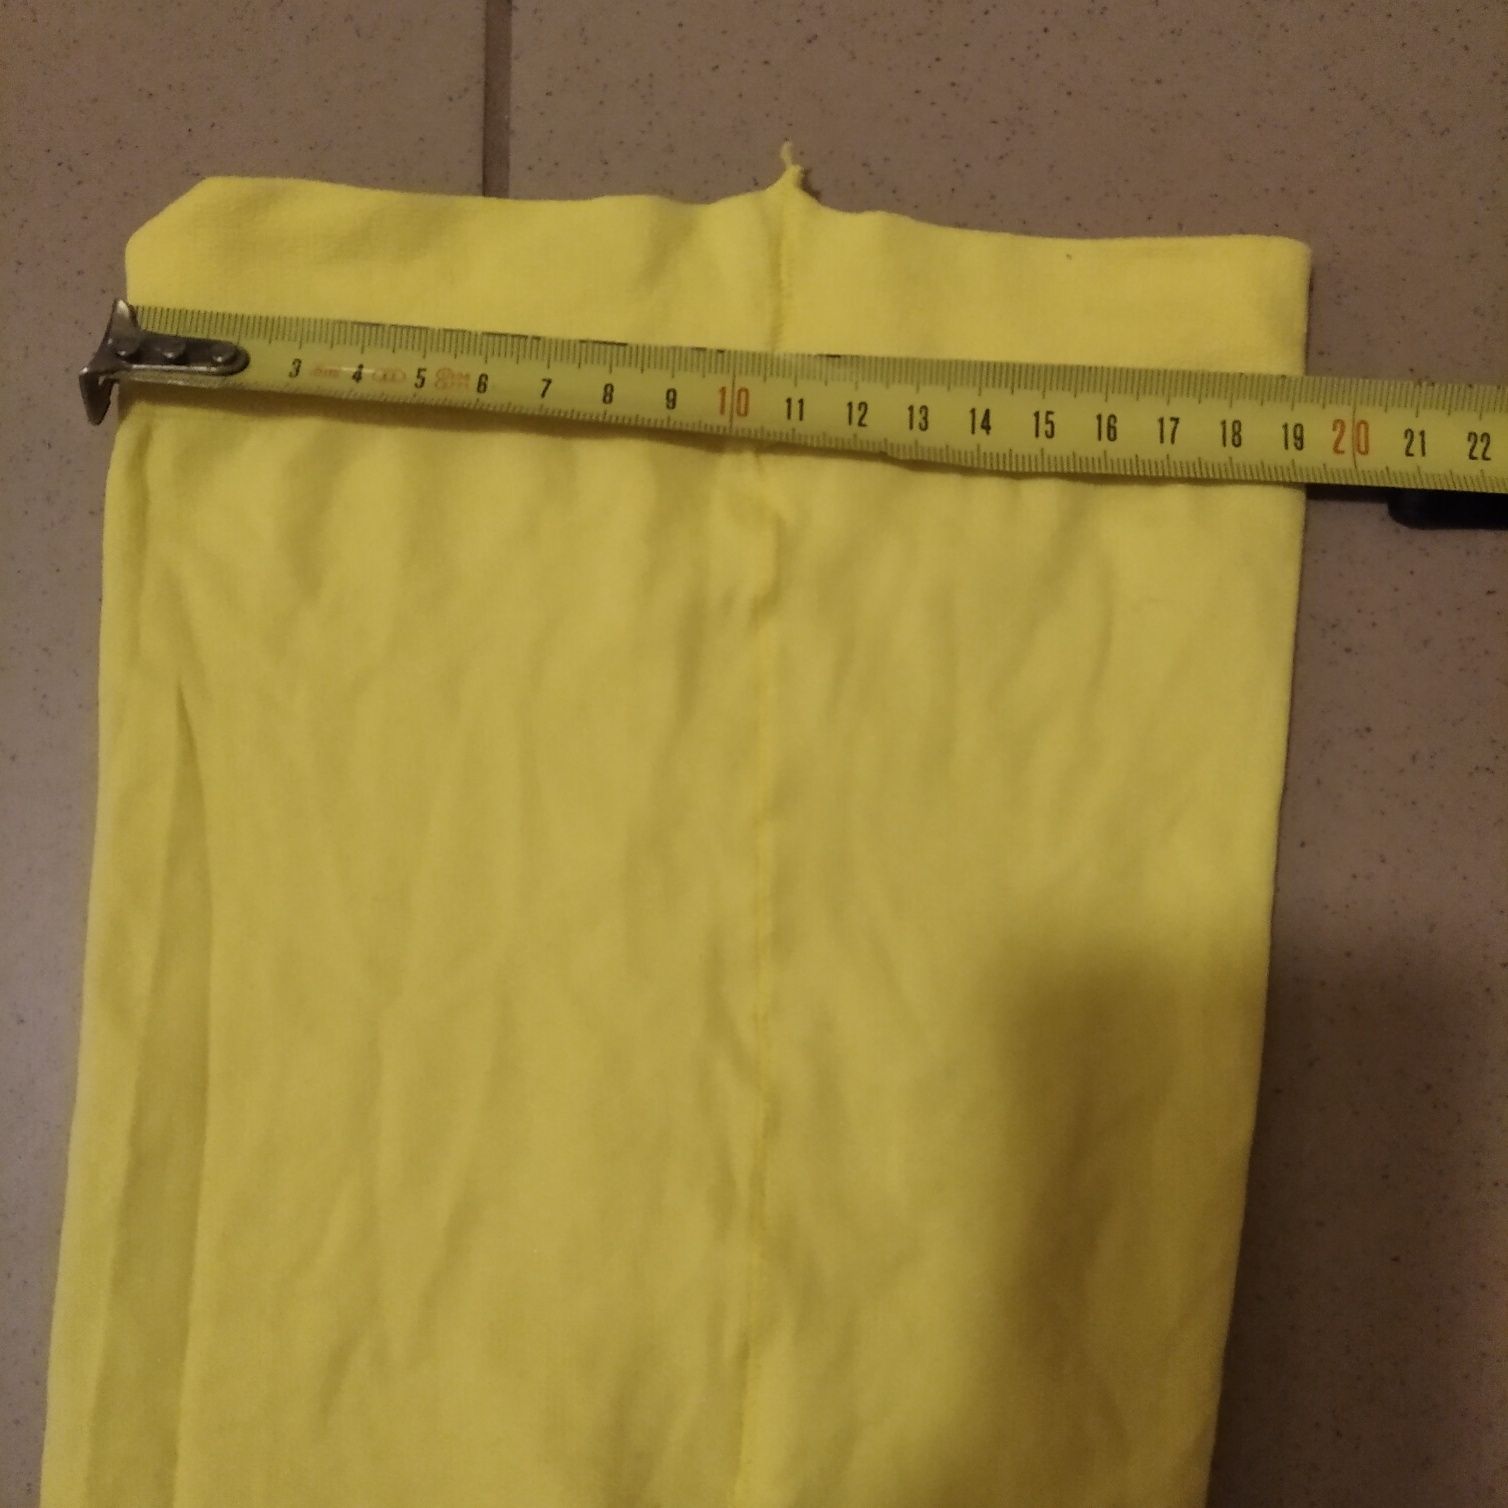 Rajstopy żółte kryjące rozmiar M/S